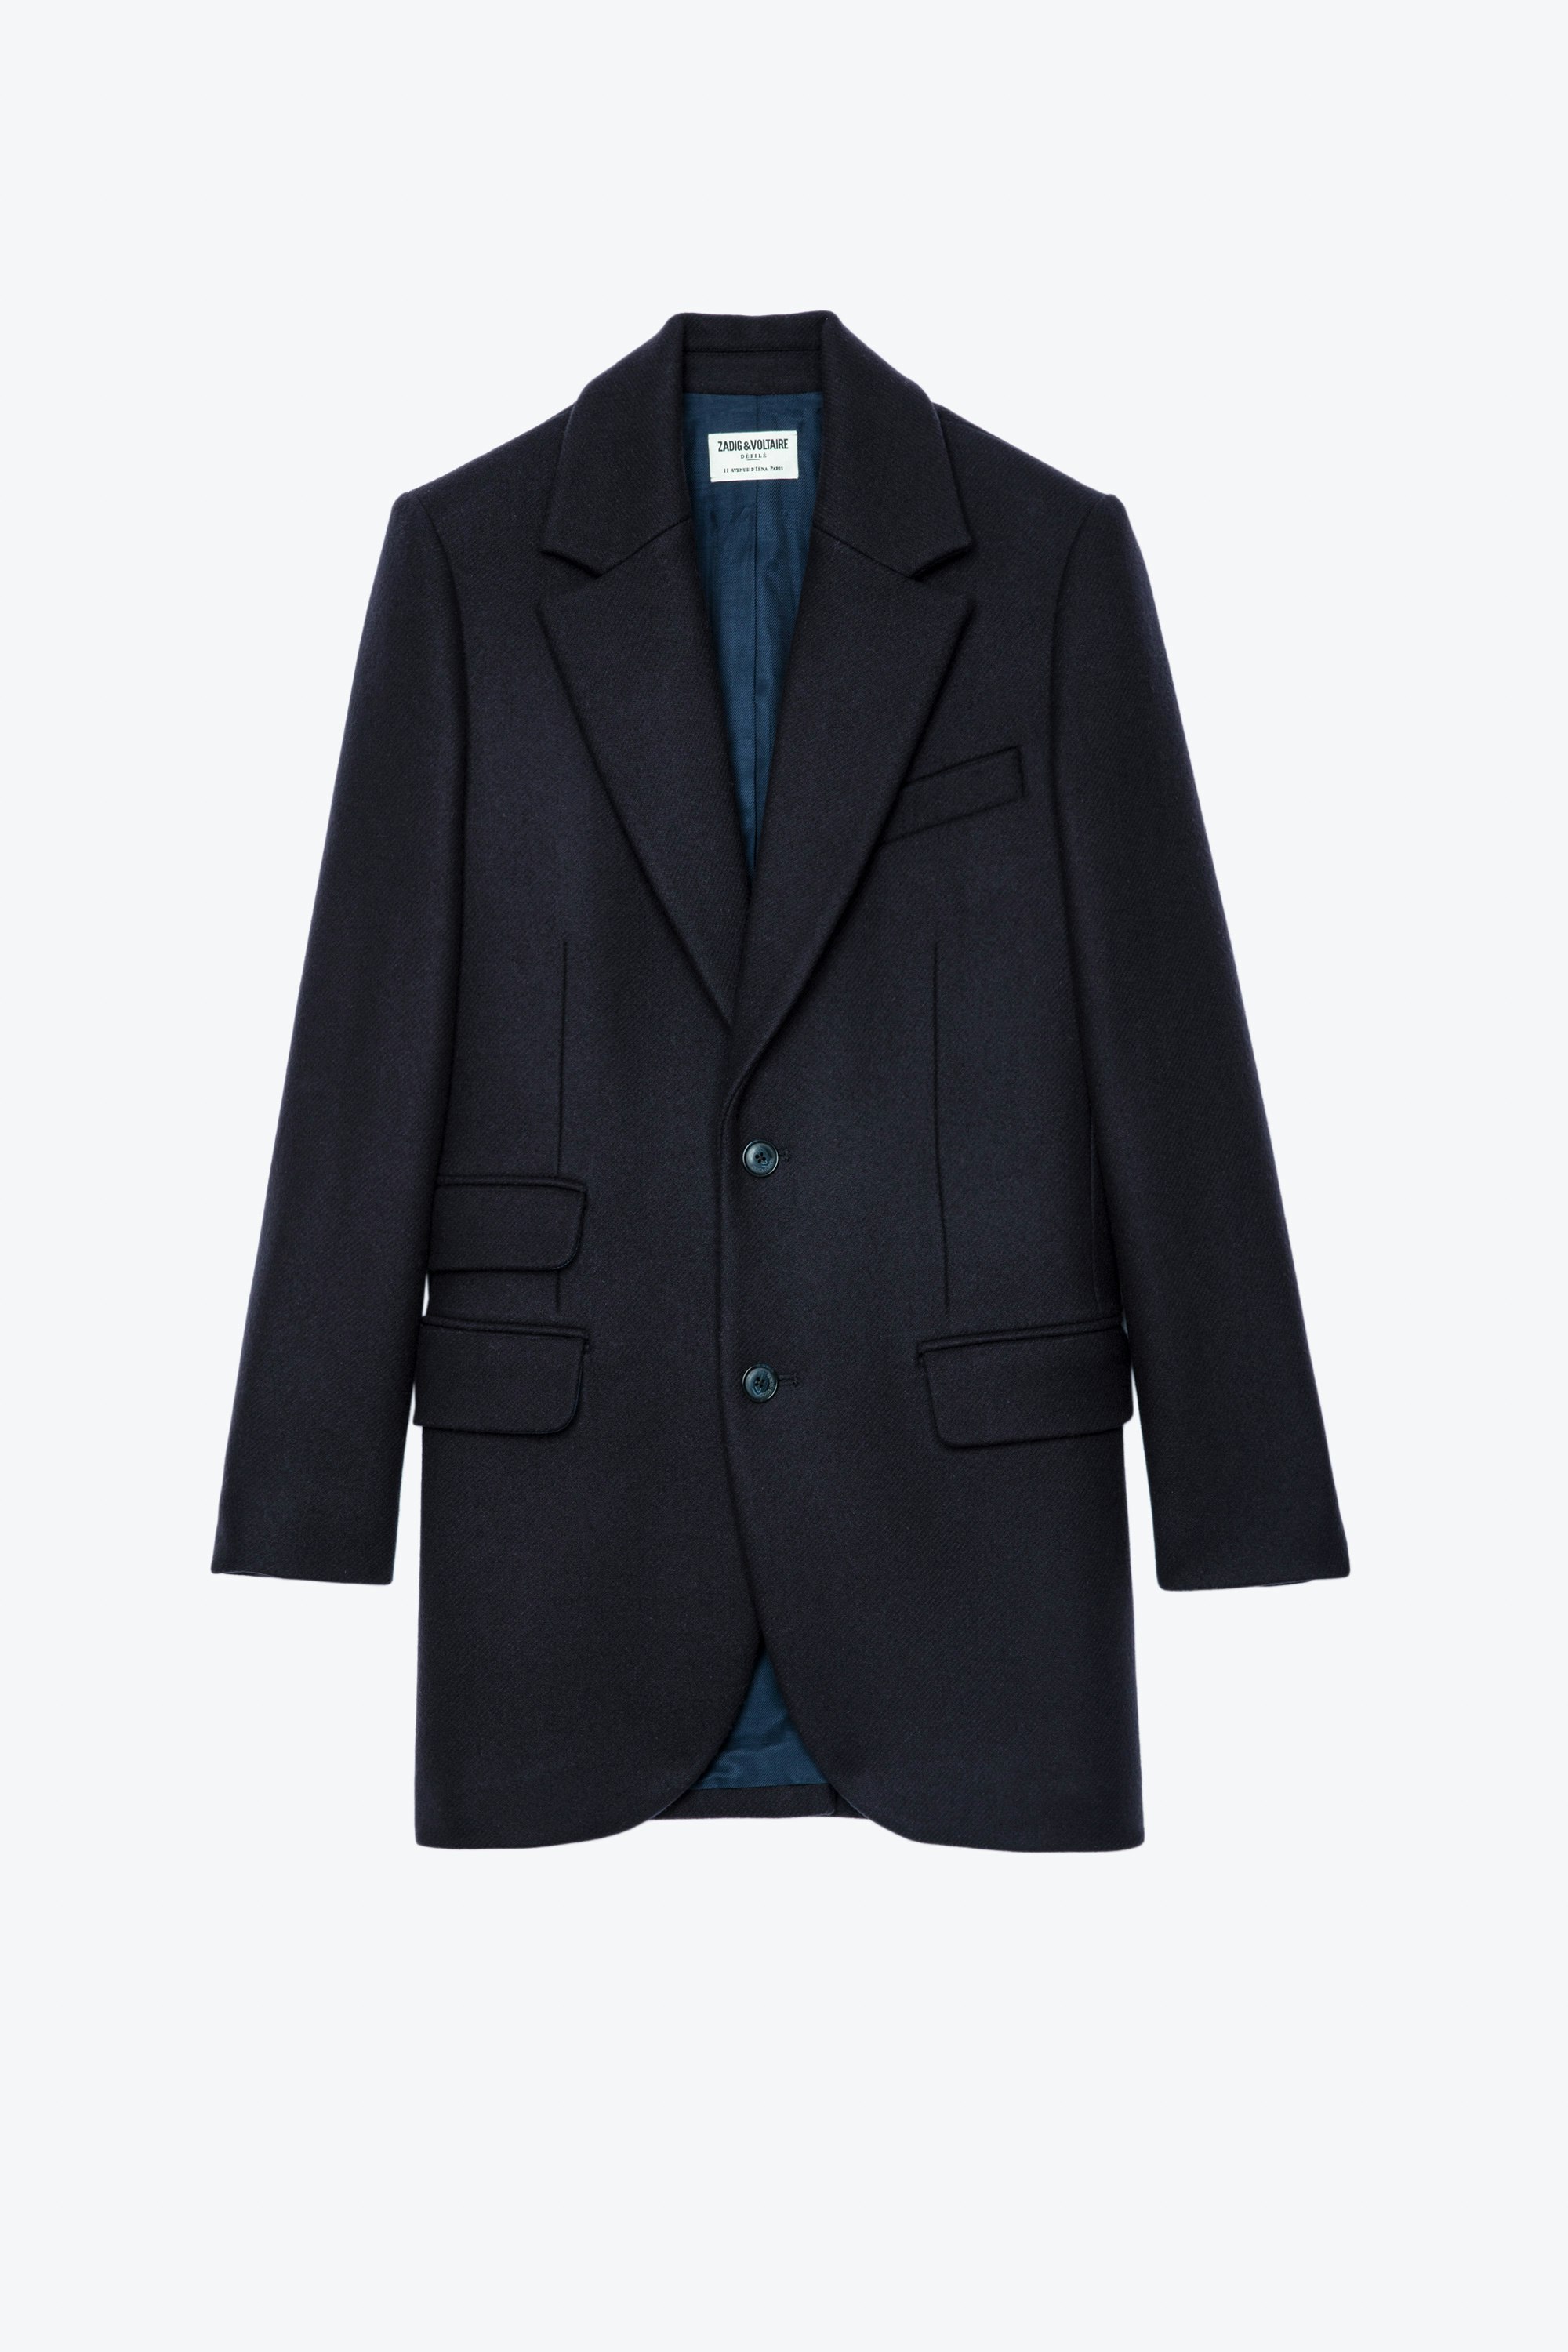 Violet Coat Women’s straight-cut, mid-length navy blue wool coat